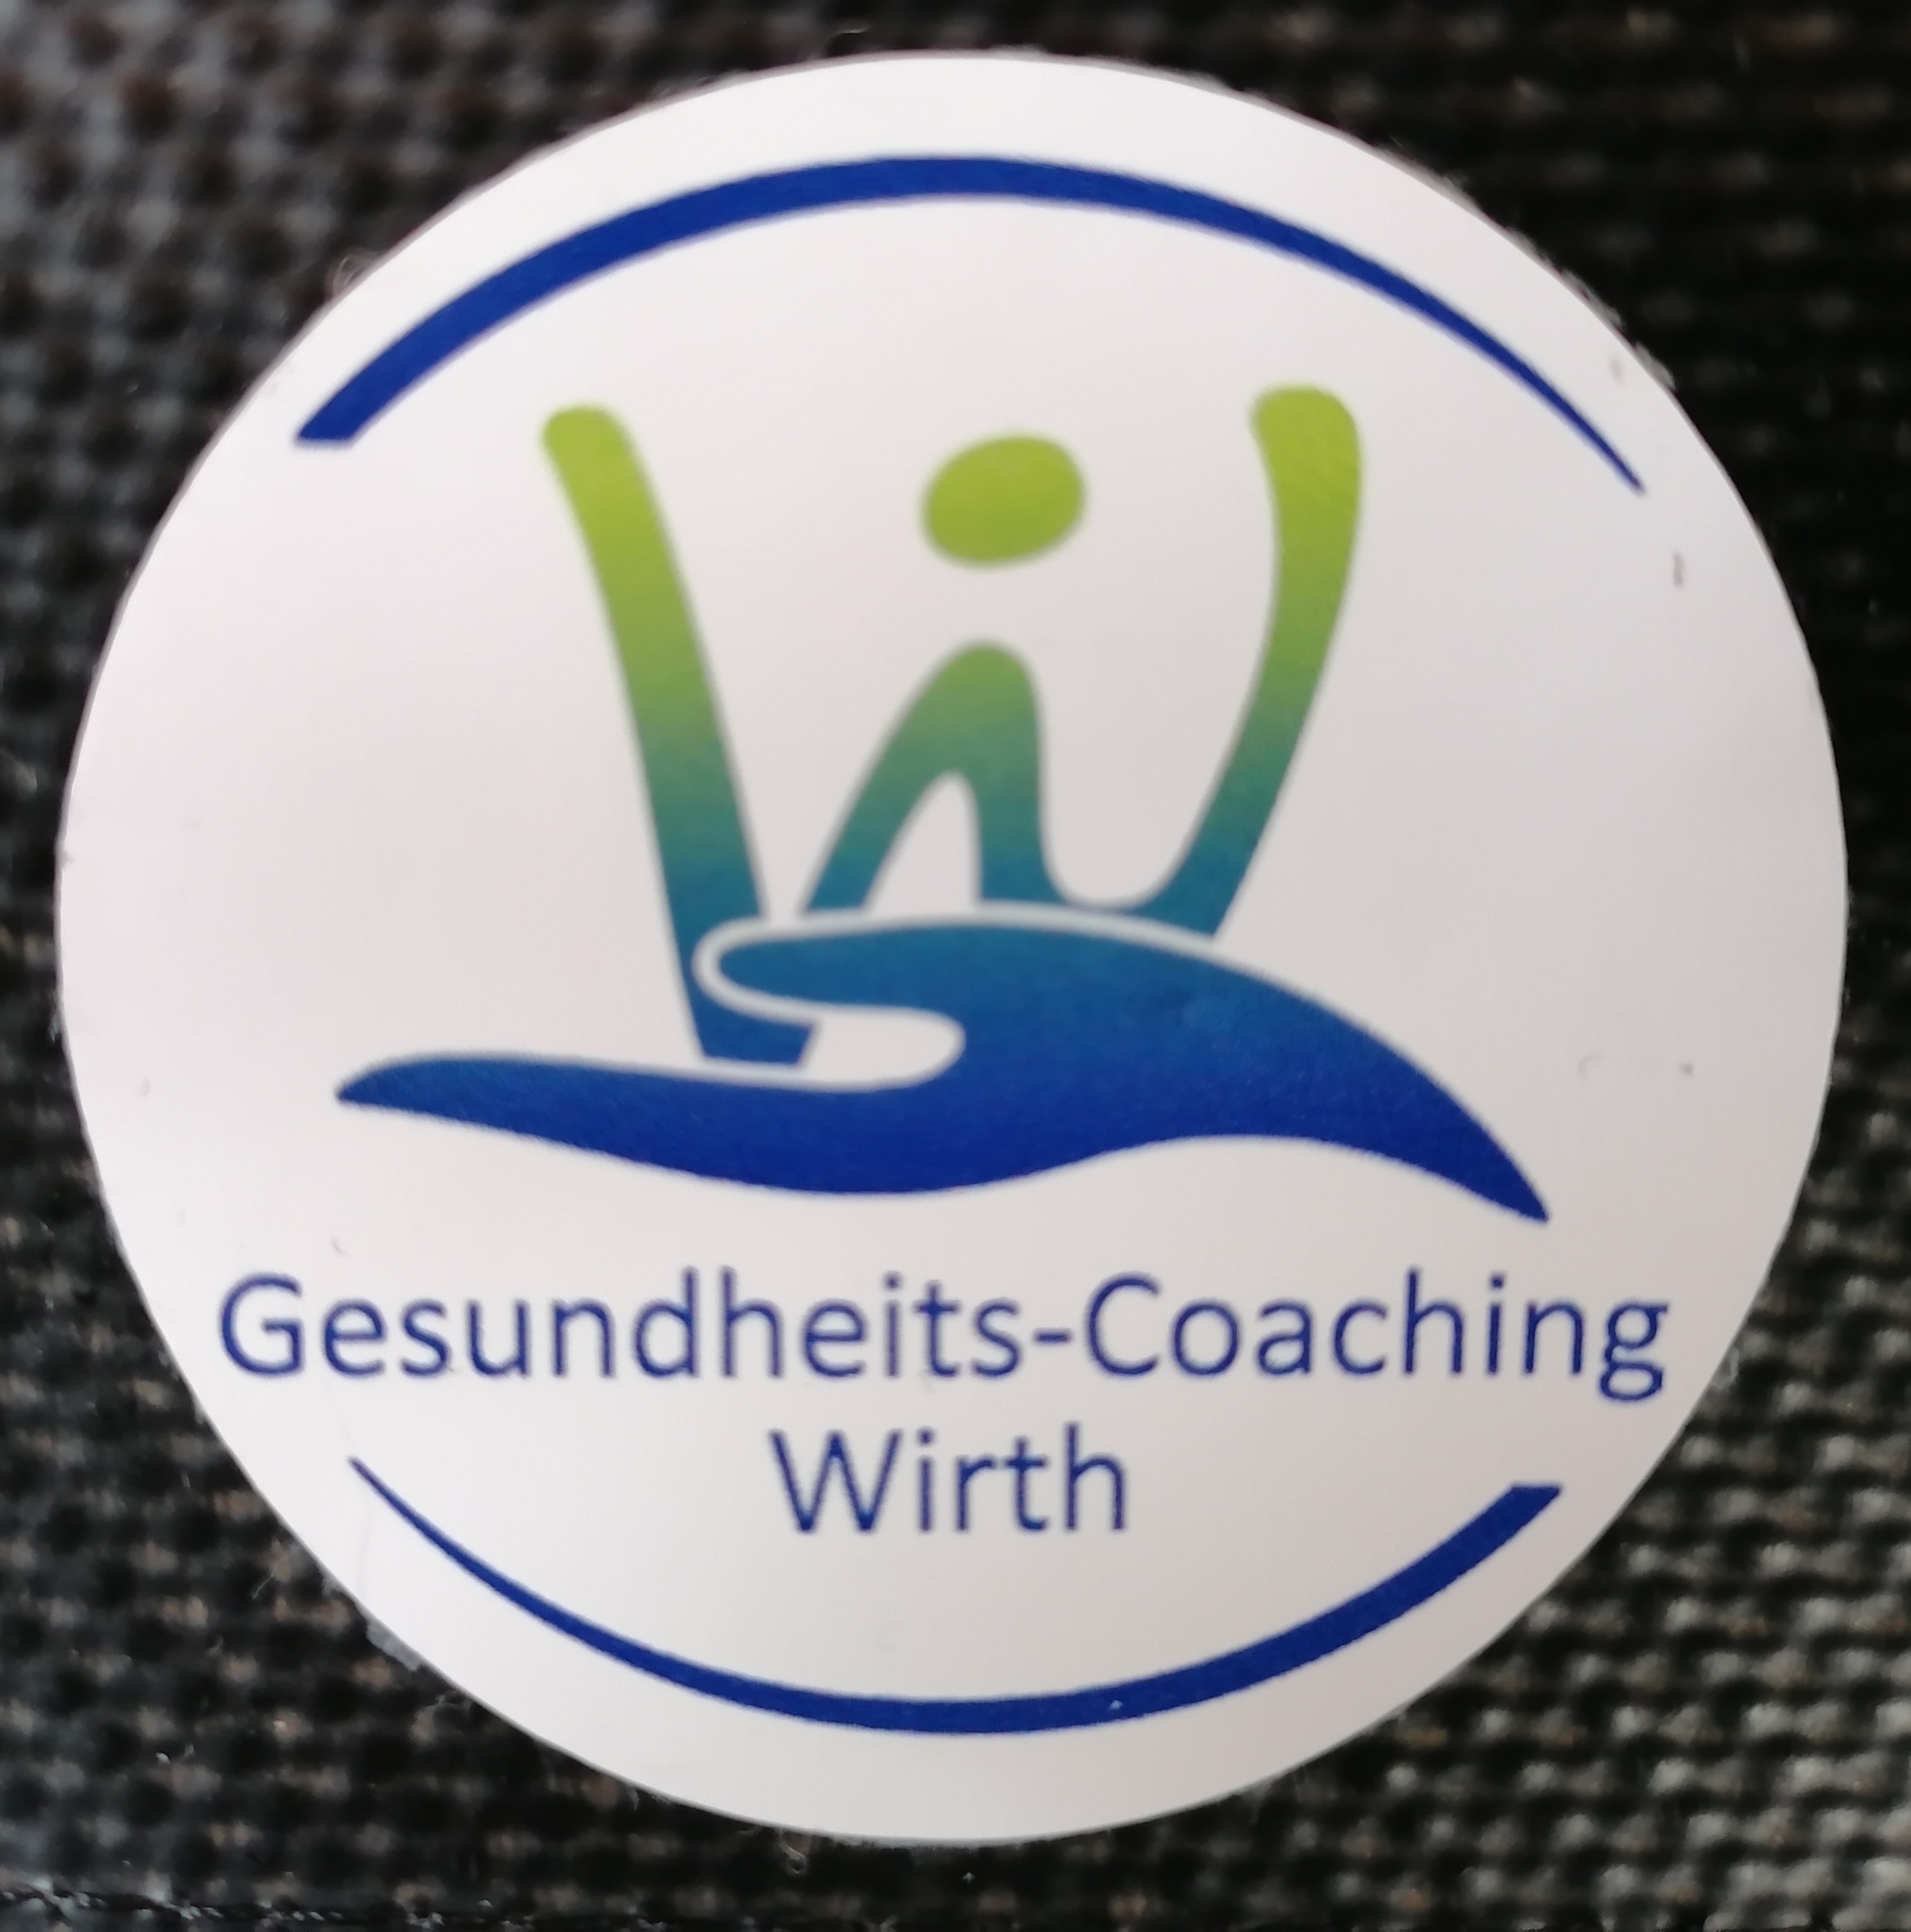 Gesundheits-Coaching Wirth 